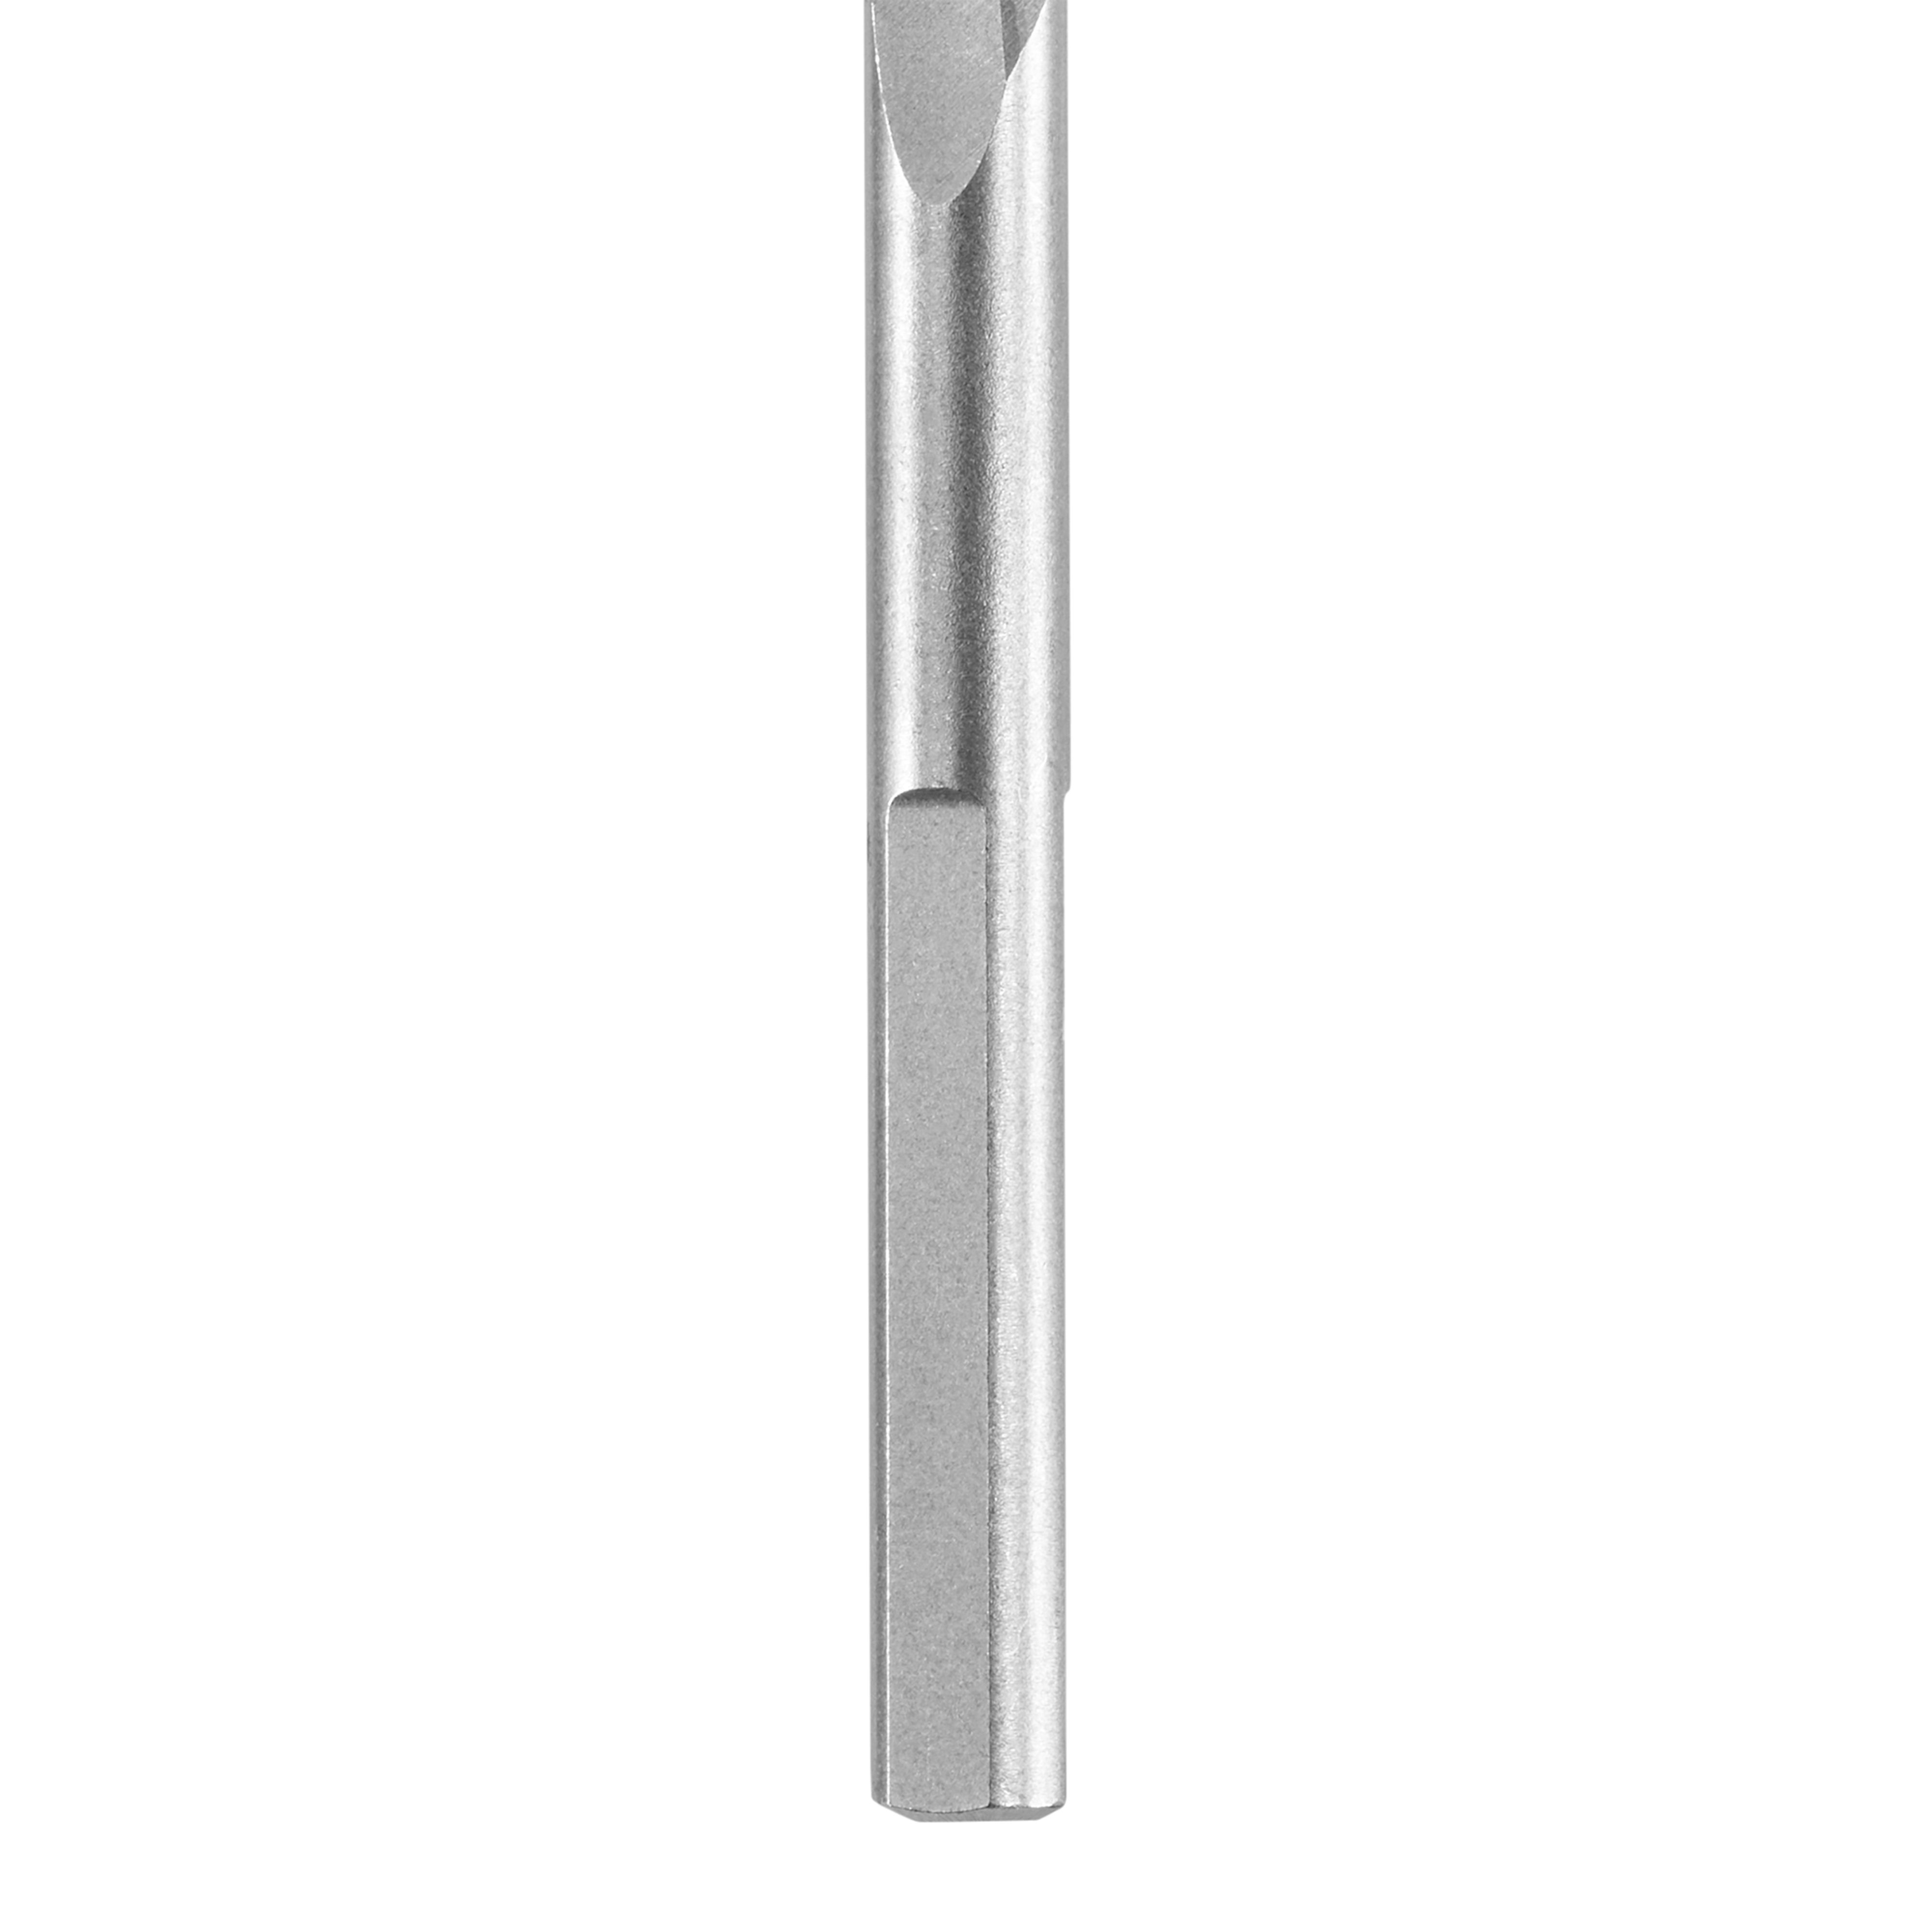 HART 3-Piece 4-inch Masonry Drill Bit Set 3/16-inch, 1/4-inch, 5/16-inch - image 4 of 7